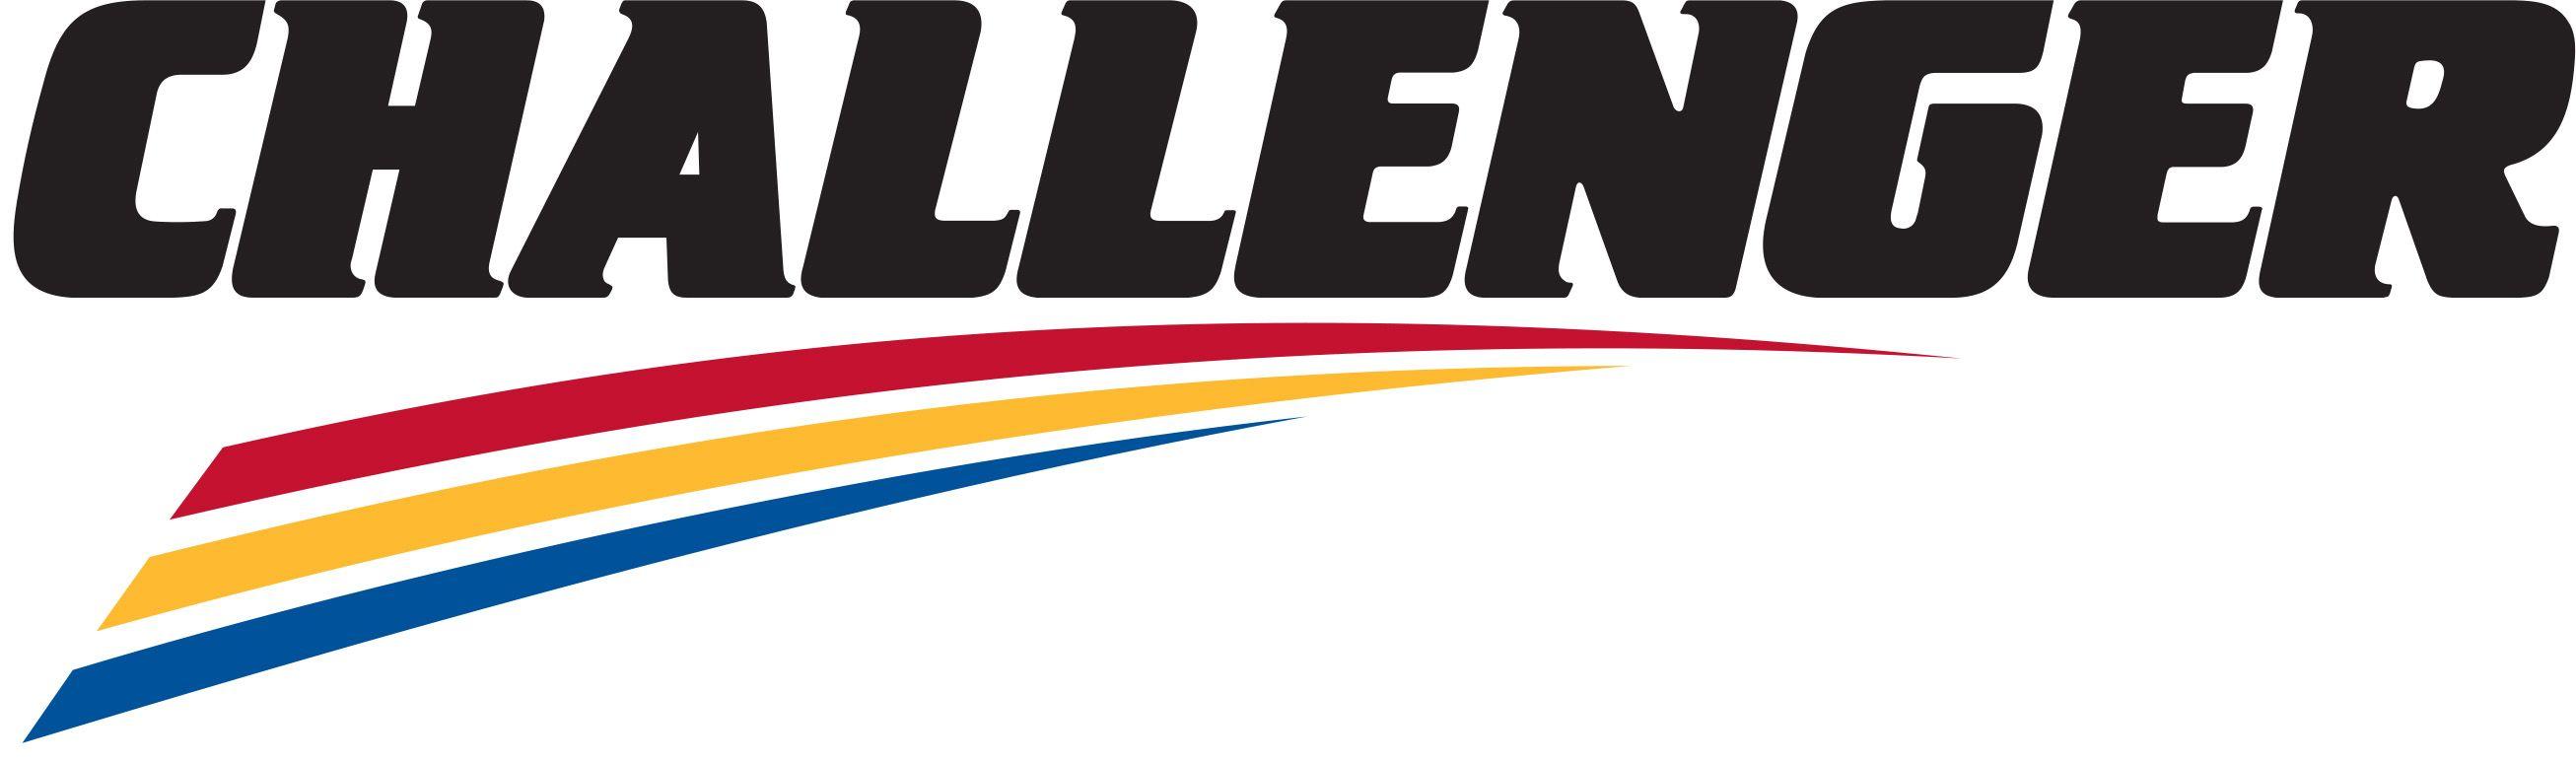 Challenger Logo - LogoDix